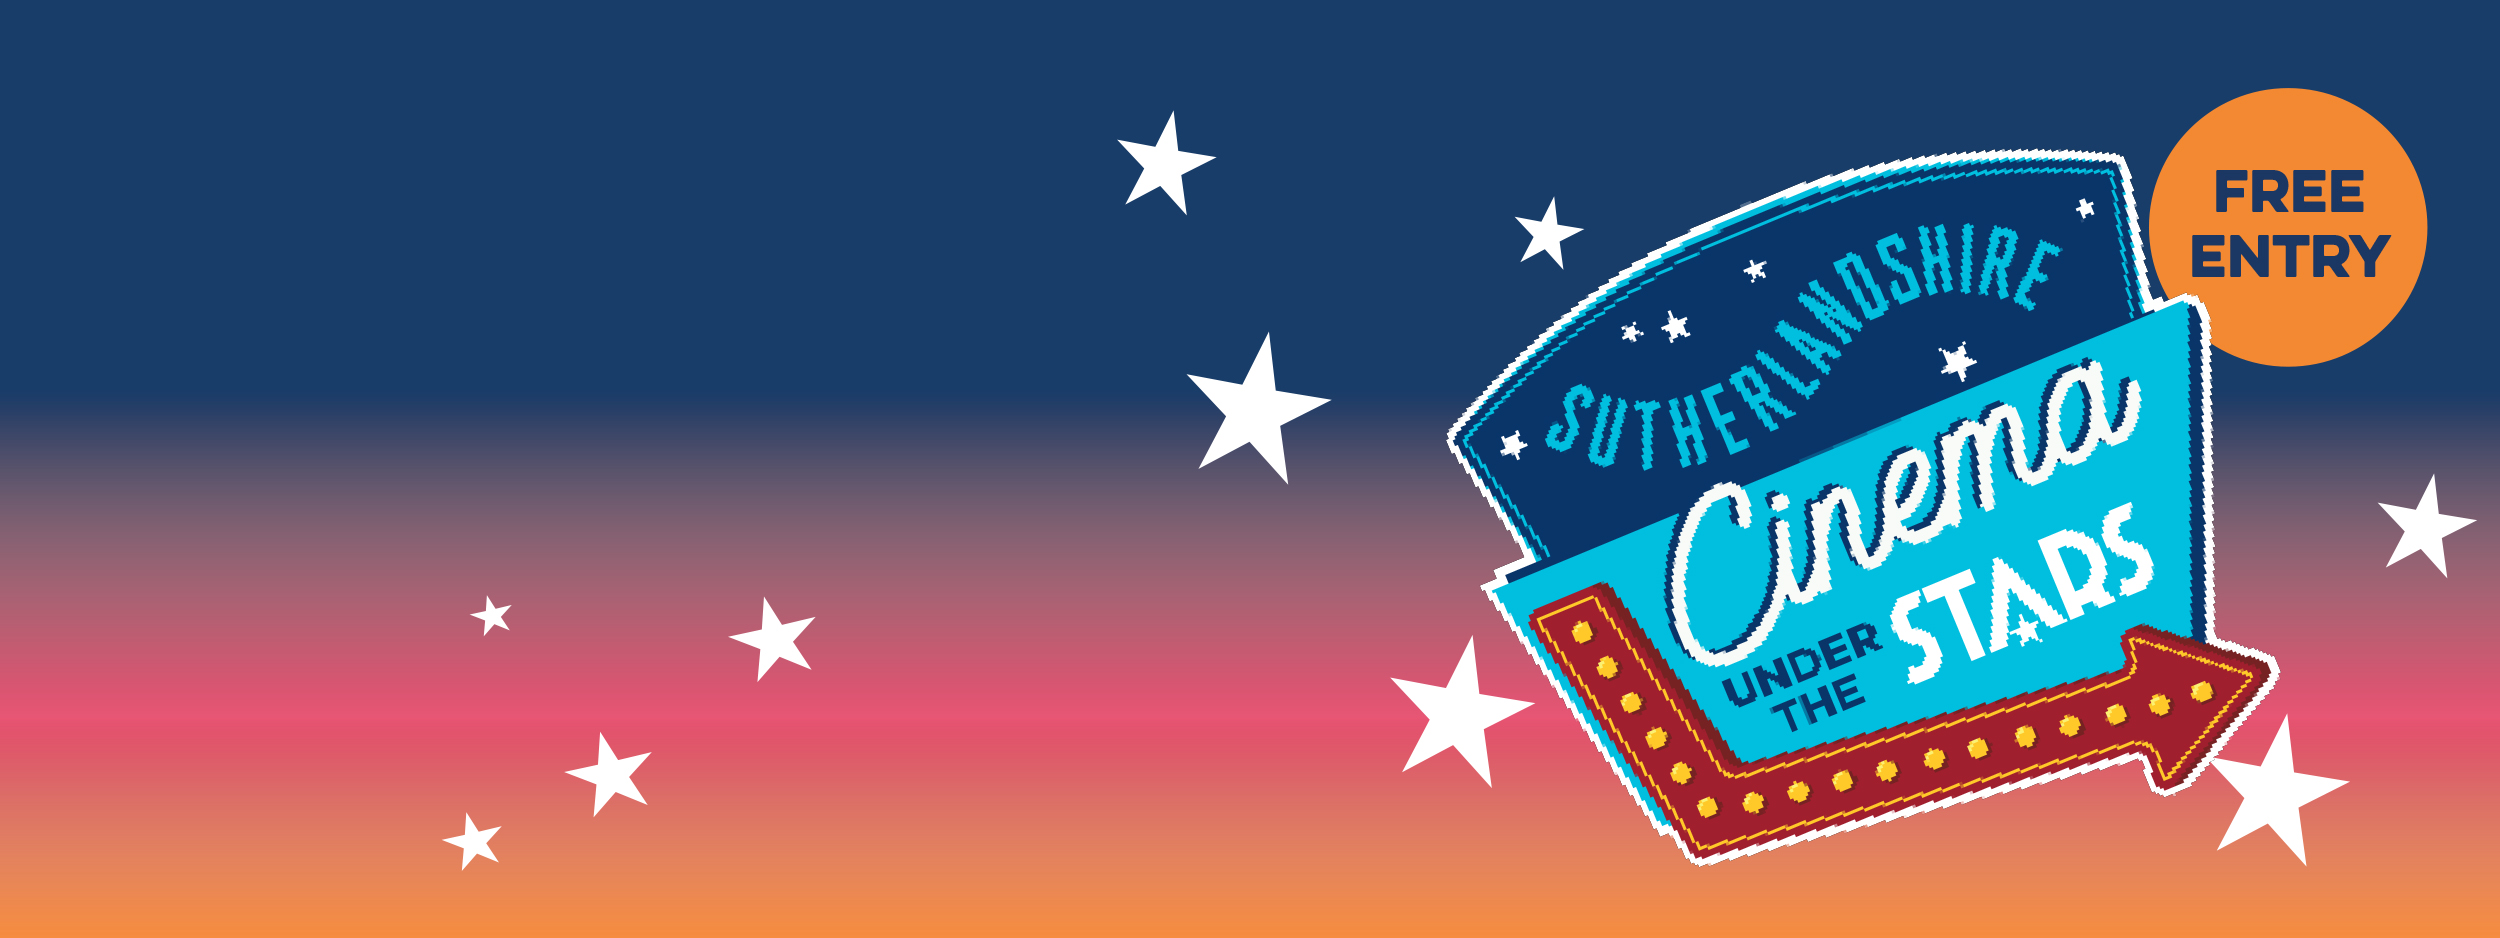 cinema under the stars logo on blue to orange background